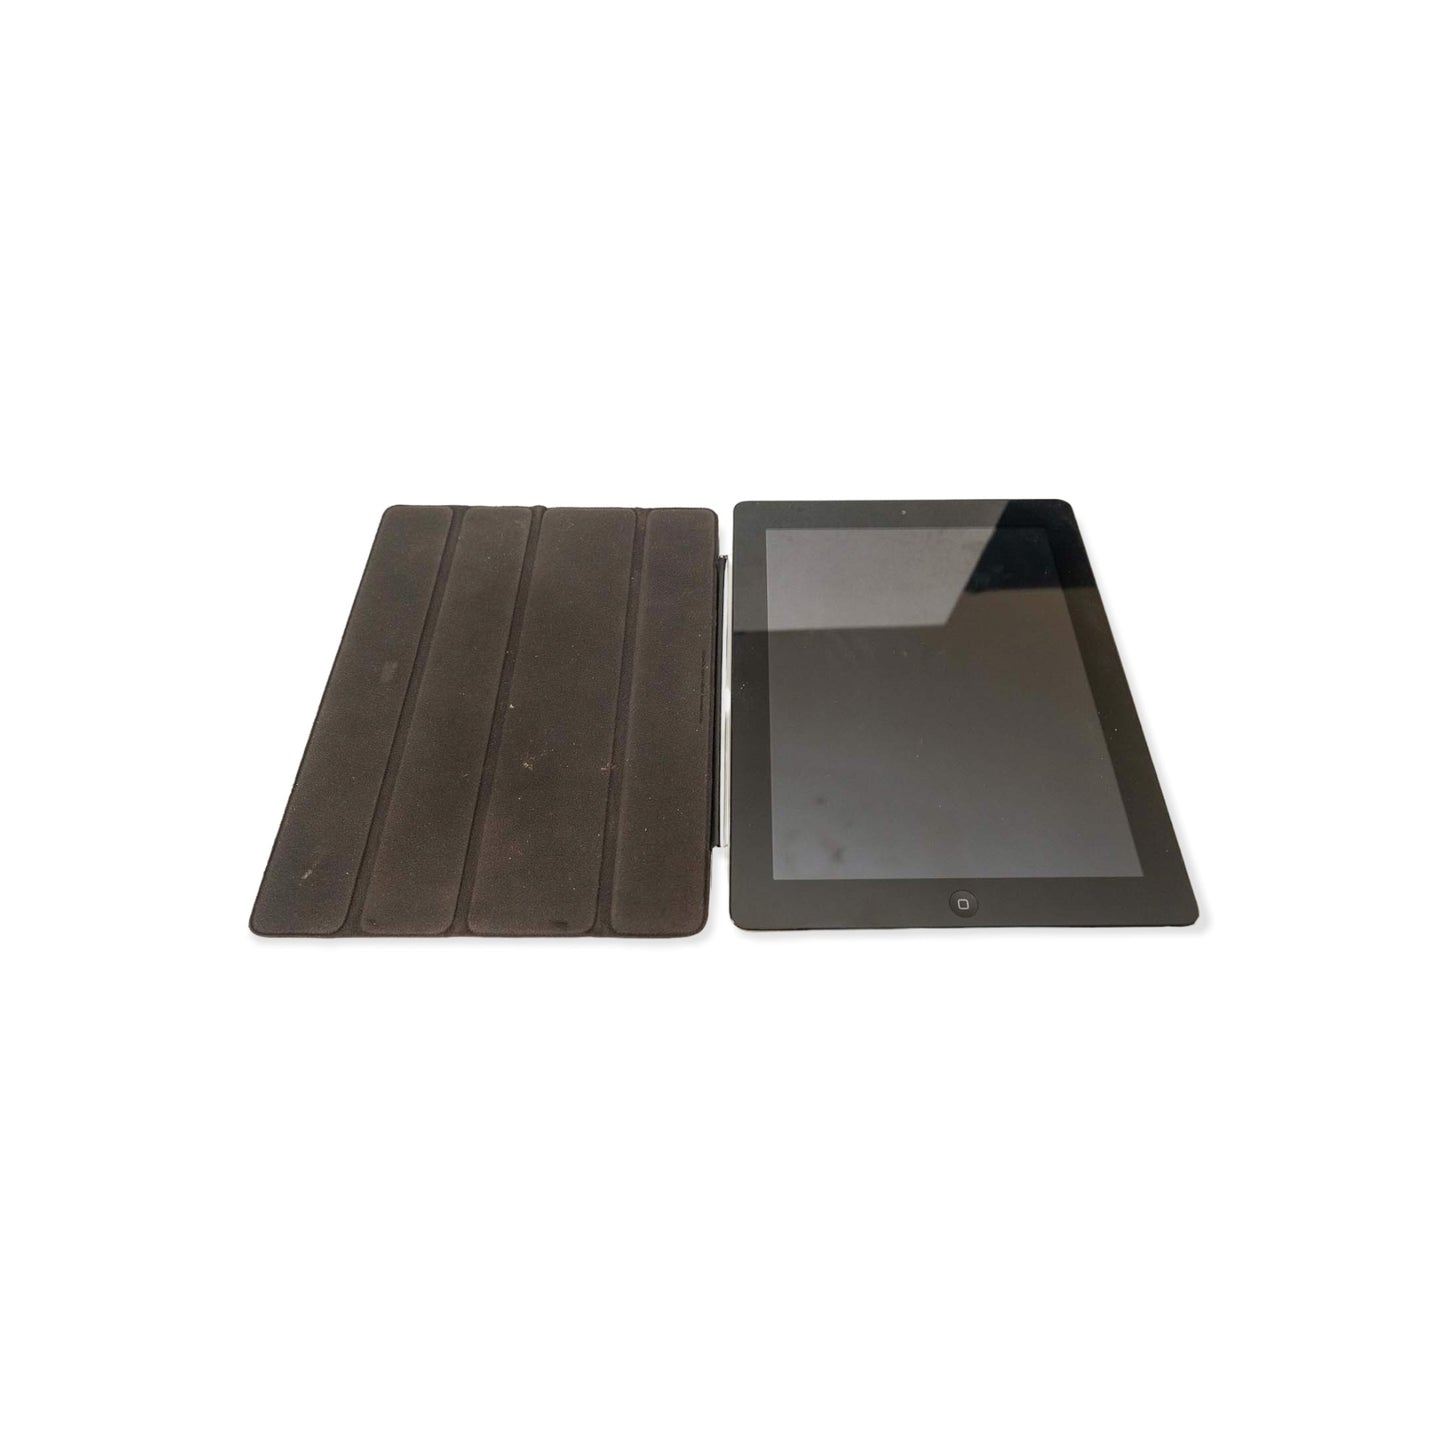 Tablet Apple iPad A1396 Serial DN6FL6M1DFJ3 sem cabo não funcional para peças